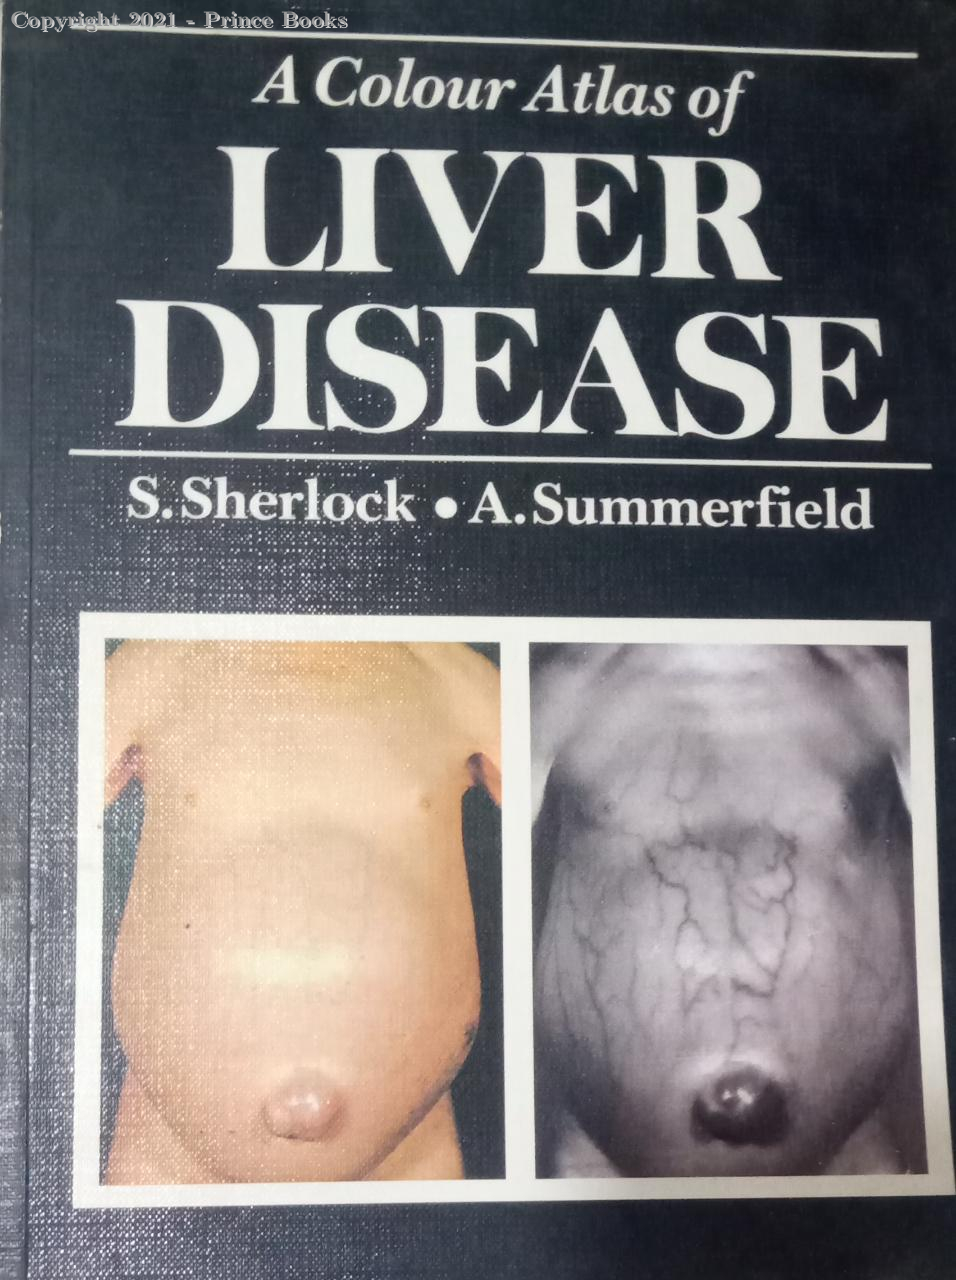 A Colour Atlas of Liver Disease